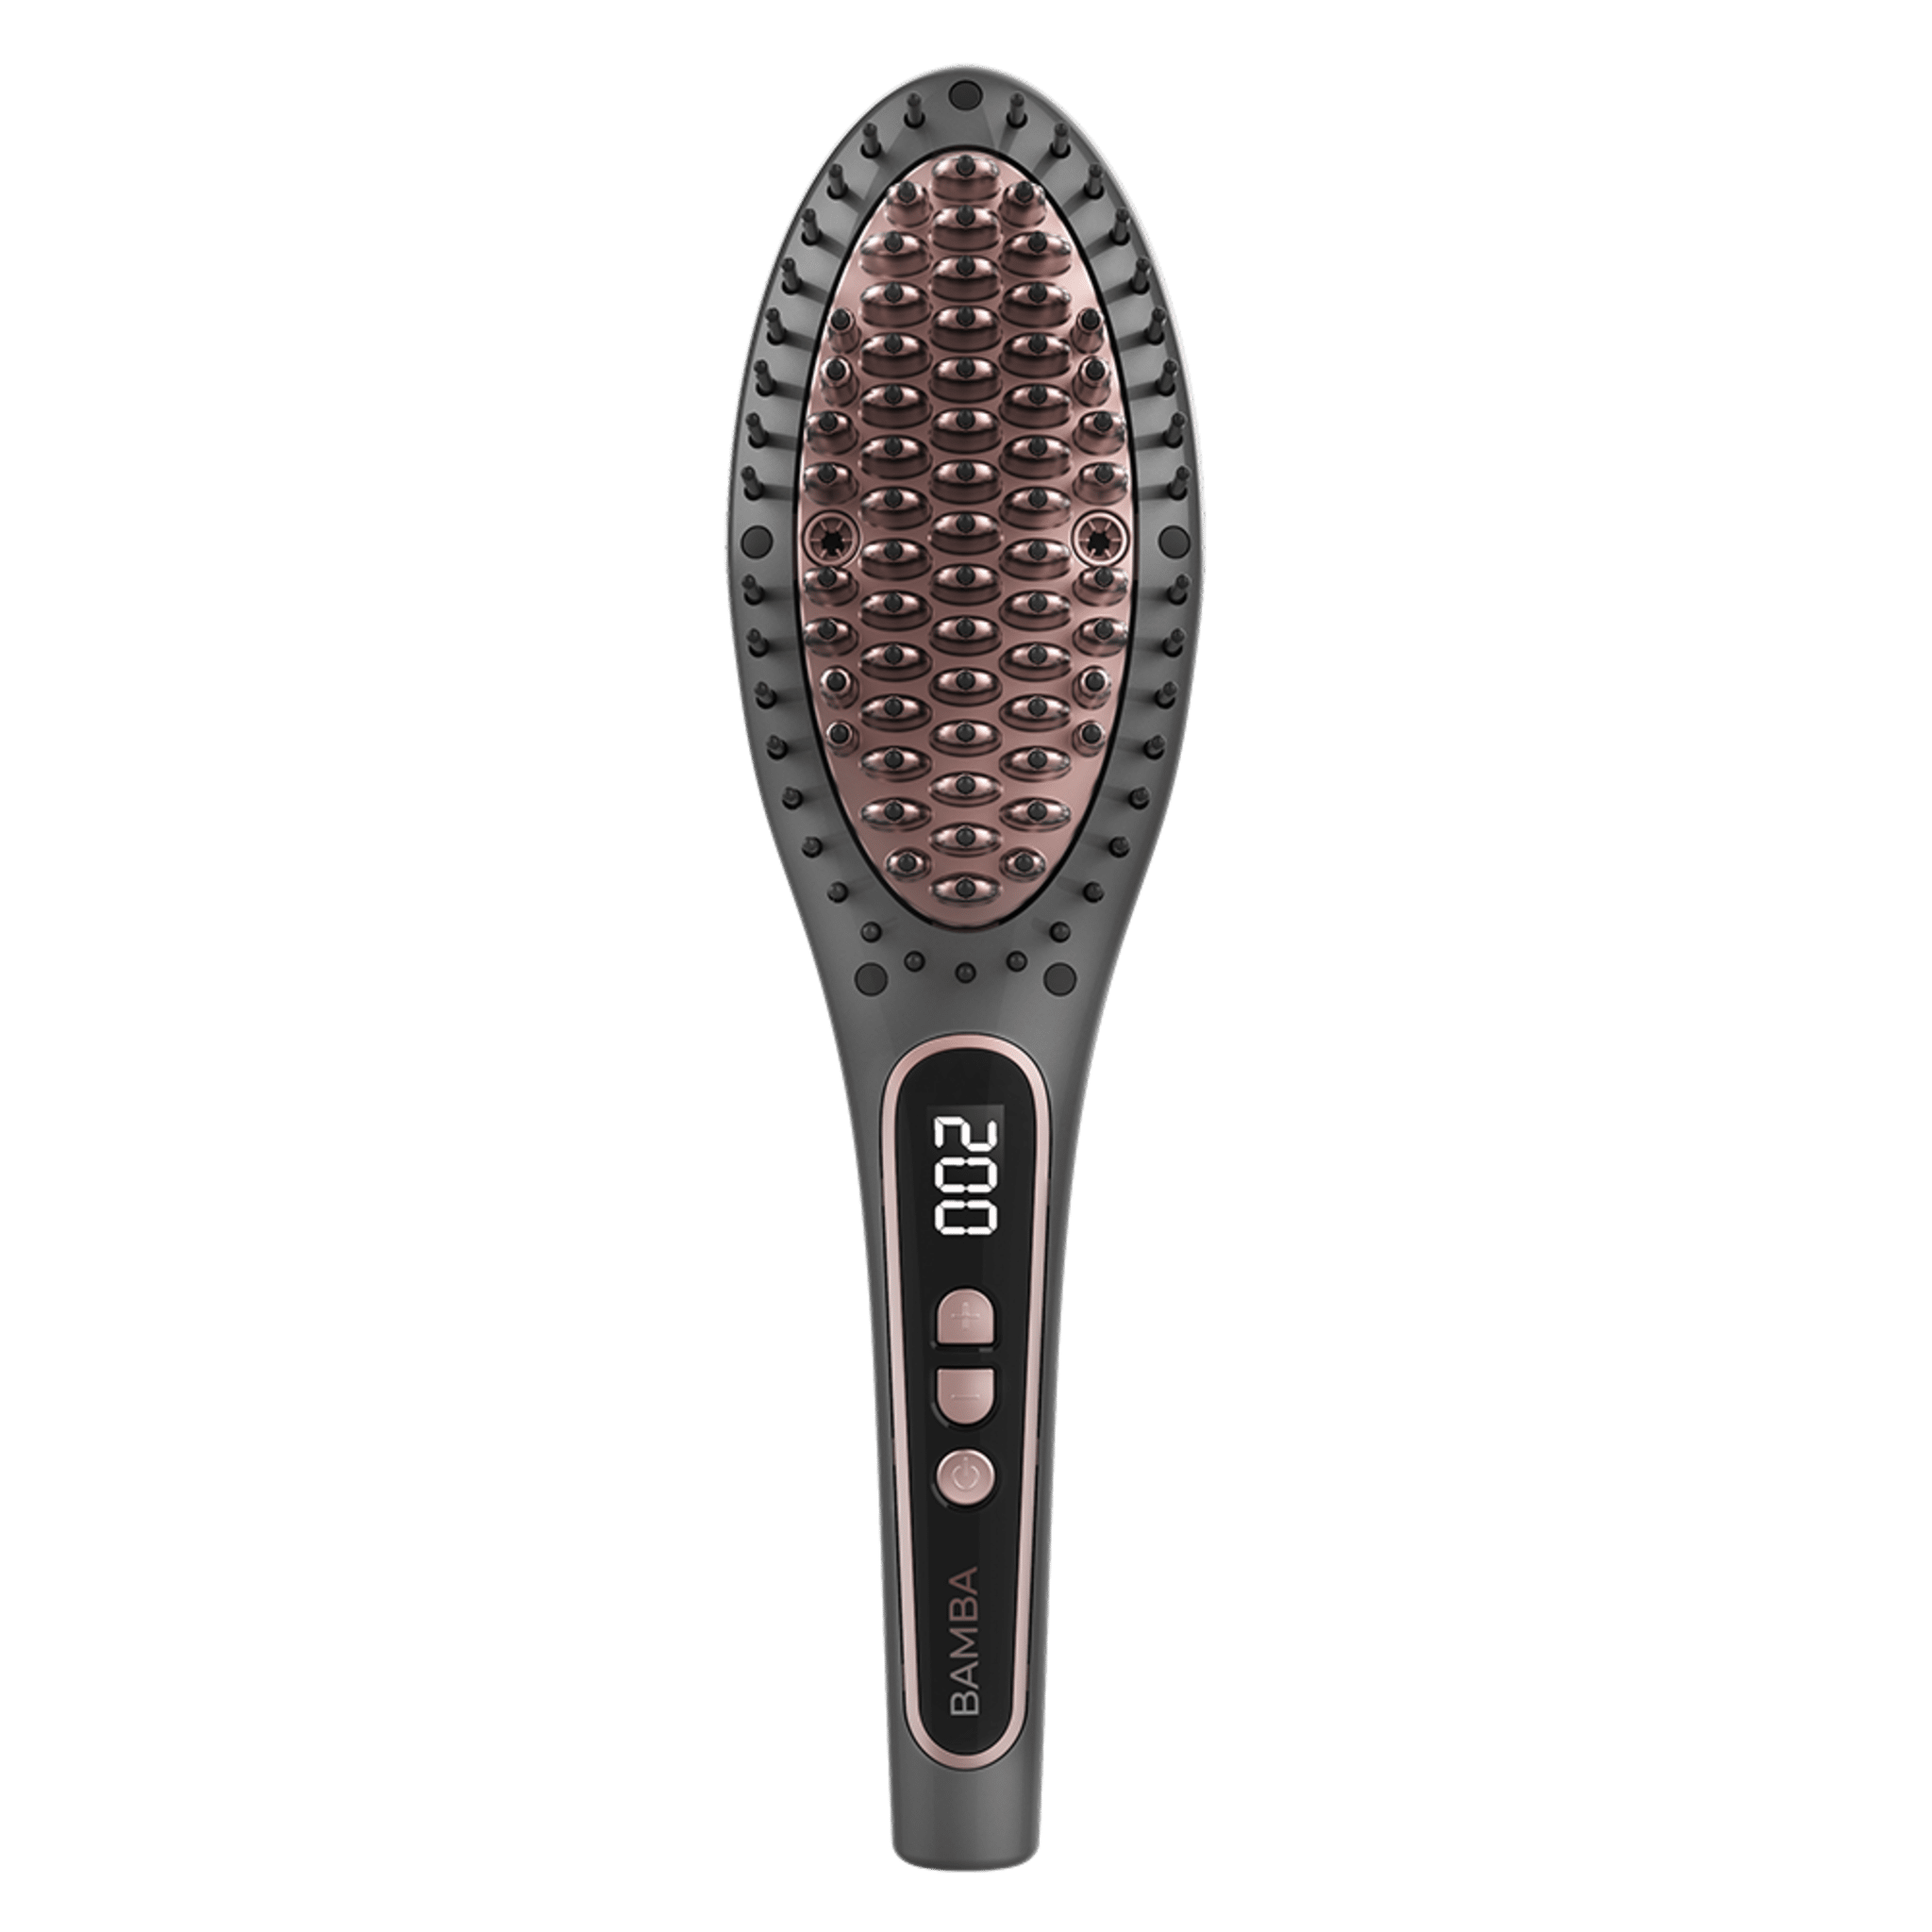 cepillo alisador / hair straightening brush 